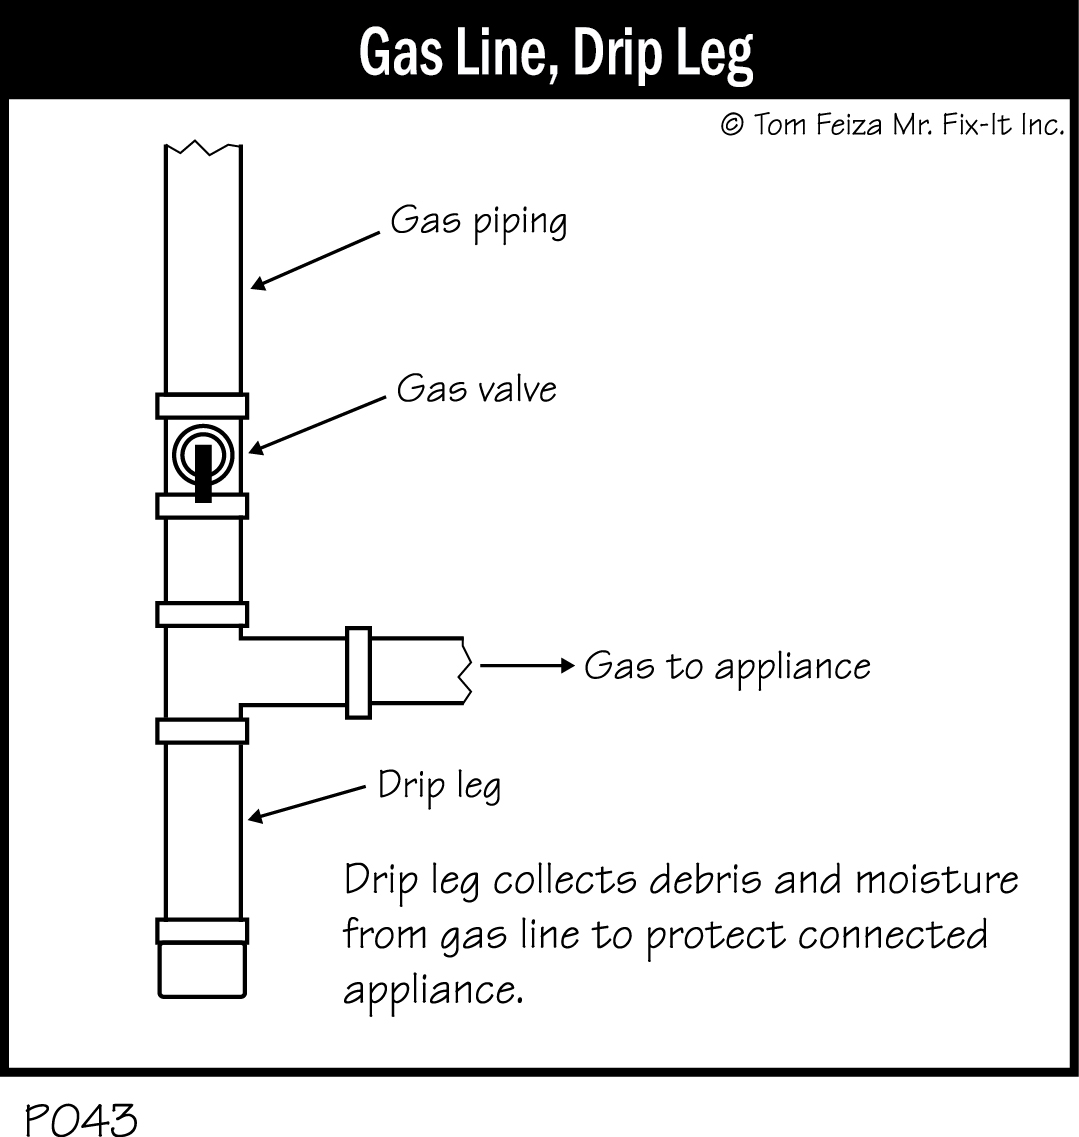 P043 - Gas Line, Drip Leg